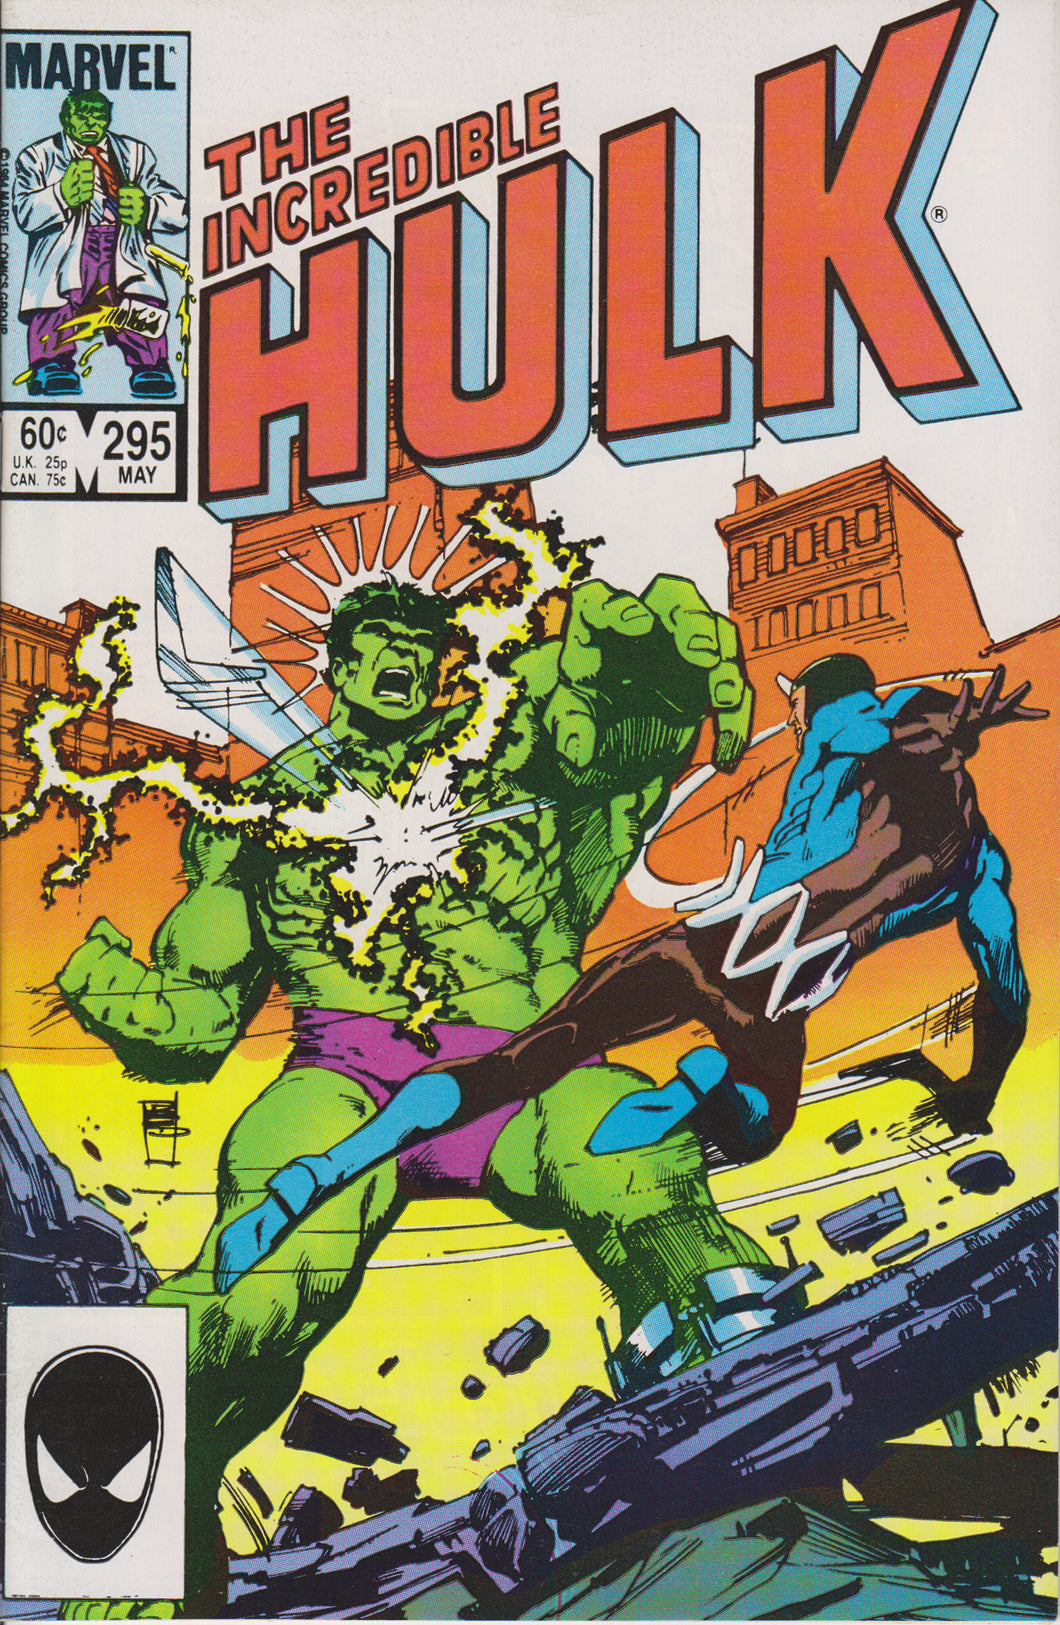 THE INCREDIBLE HULK #295 COMIC BOOK ~ Marvel Comics